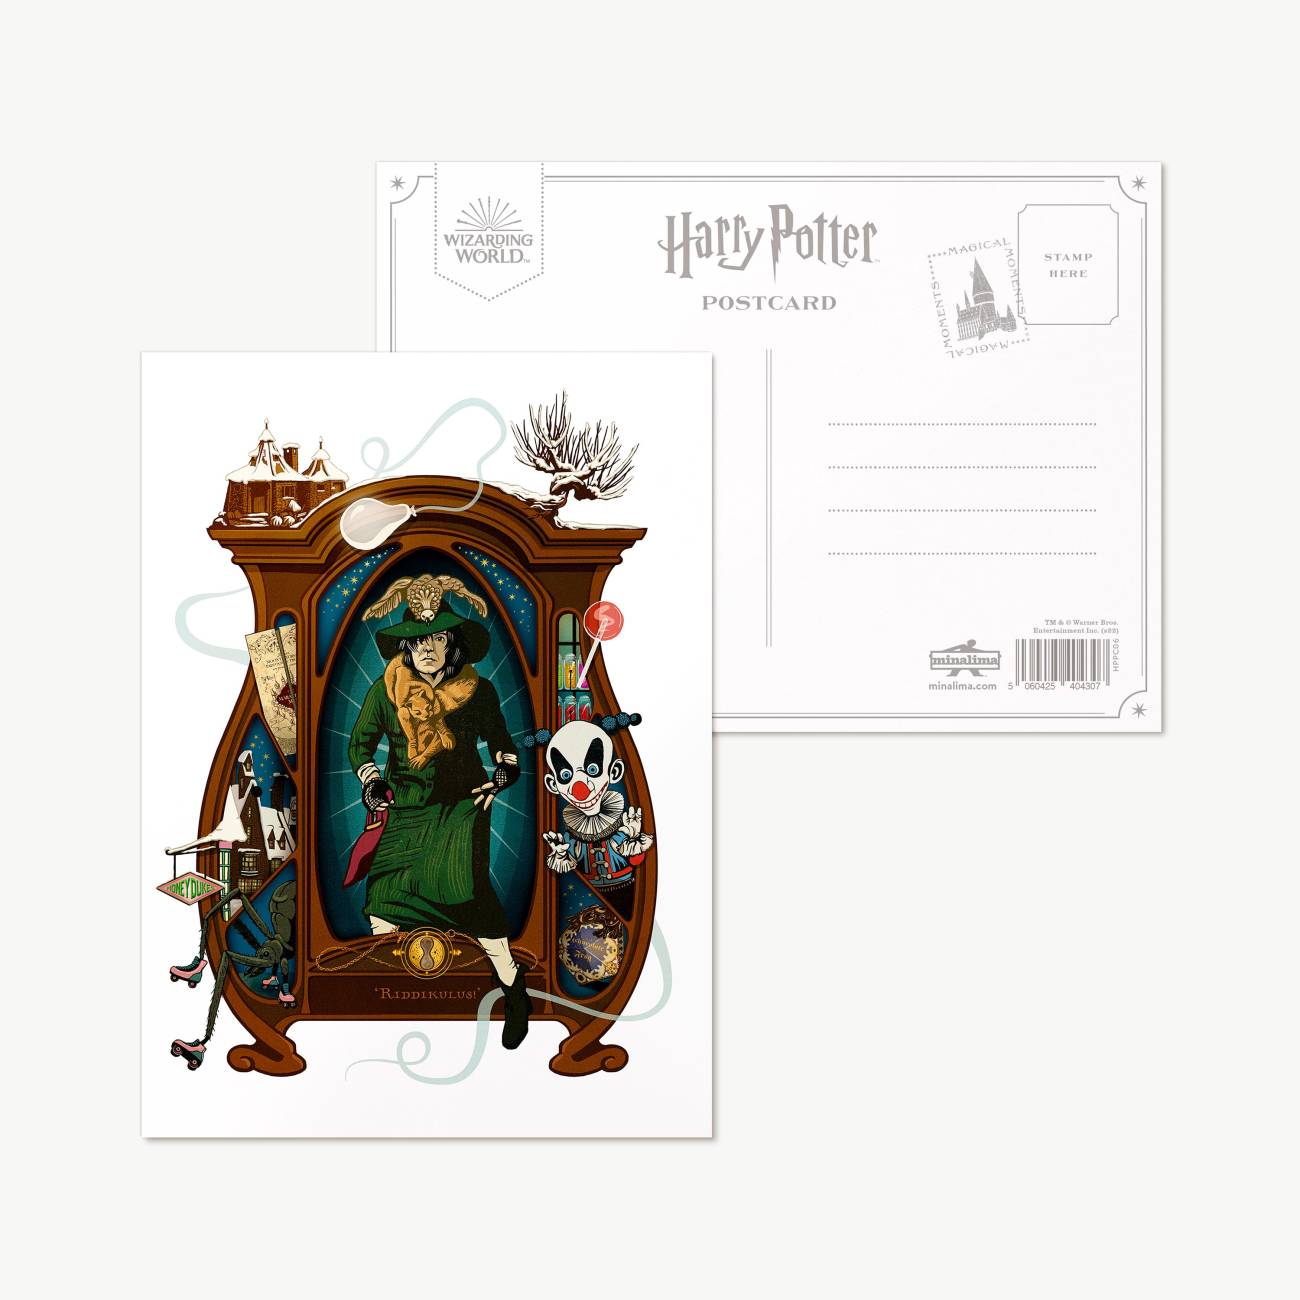 Hogwarts Express (MinaLima illustrated edition) — Harry Potter Fan Zone